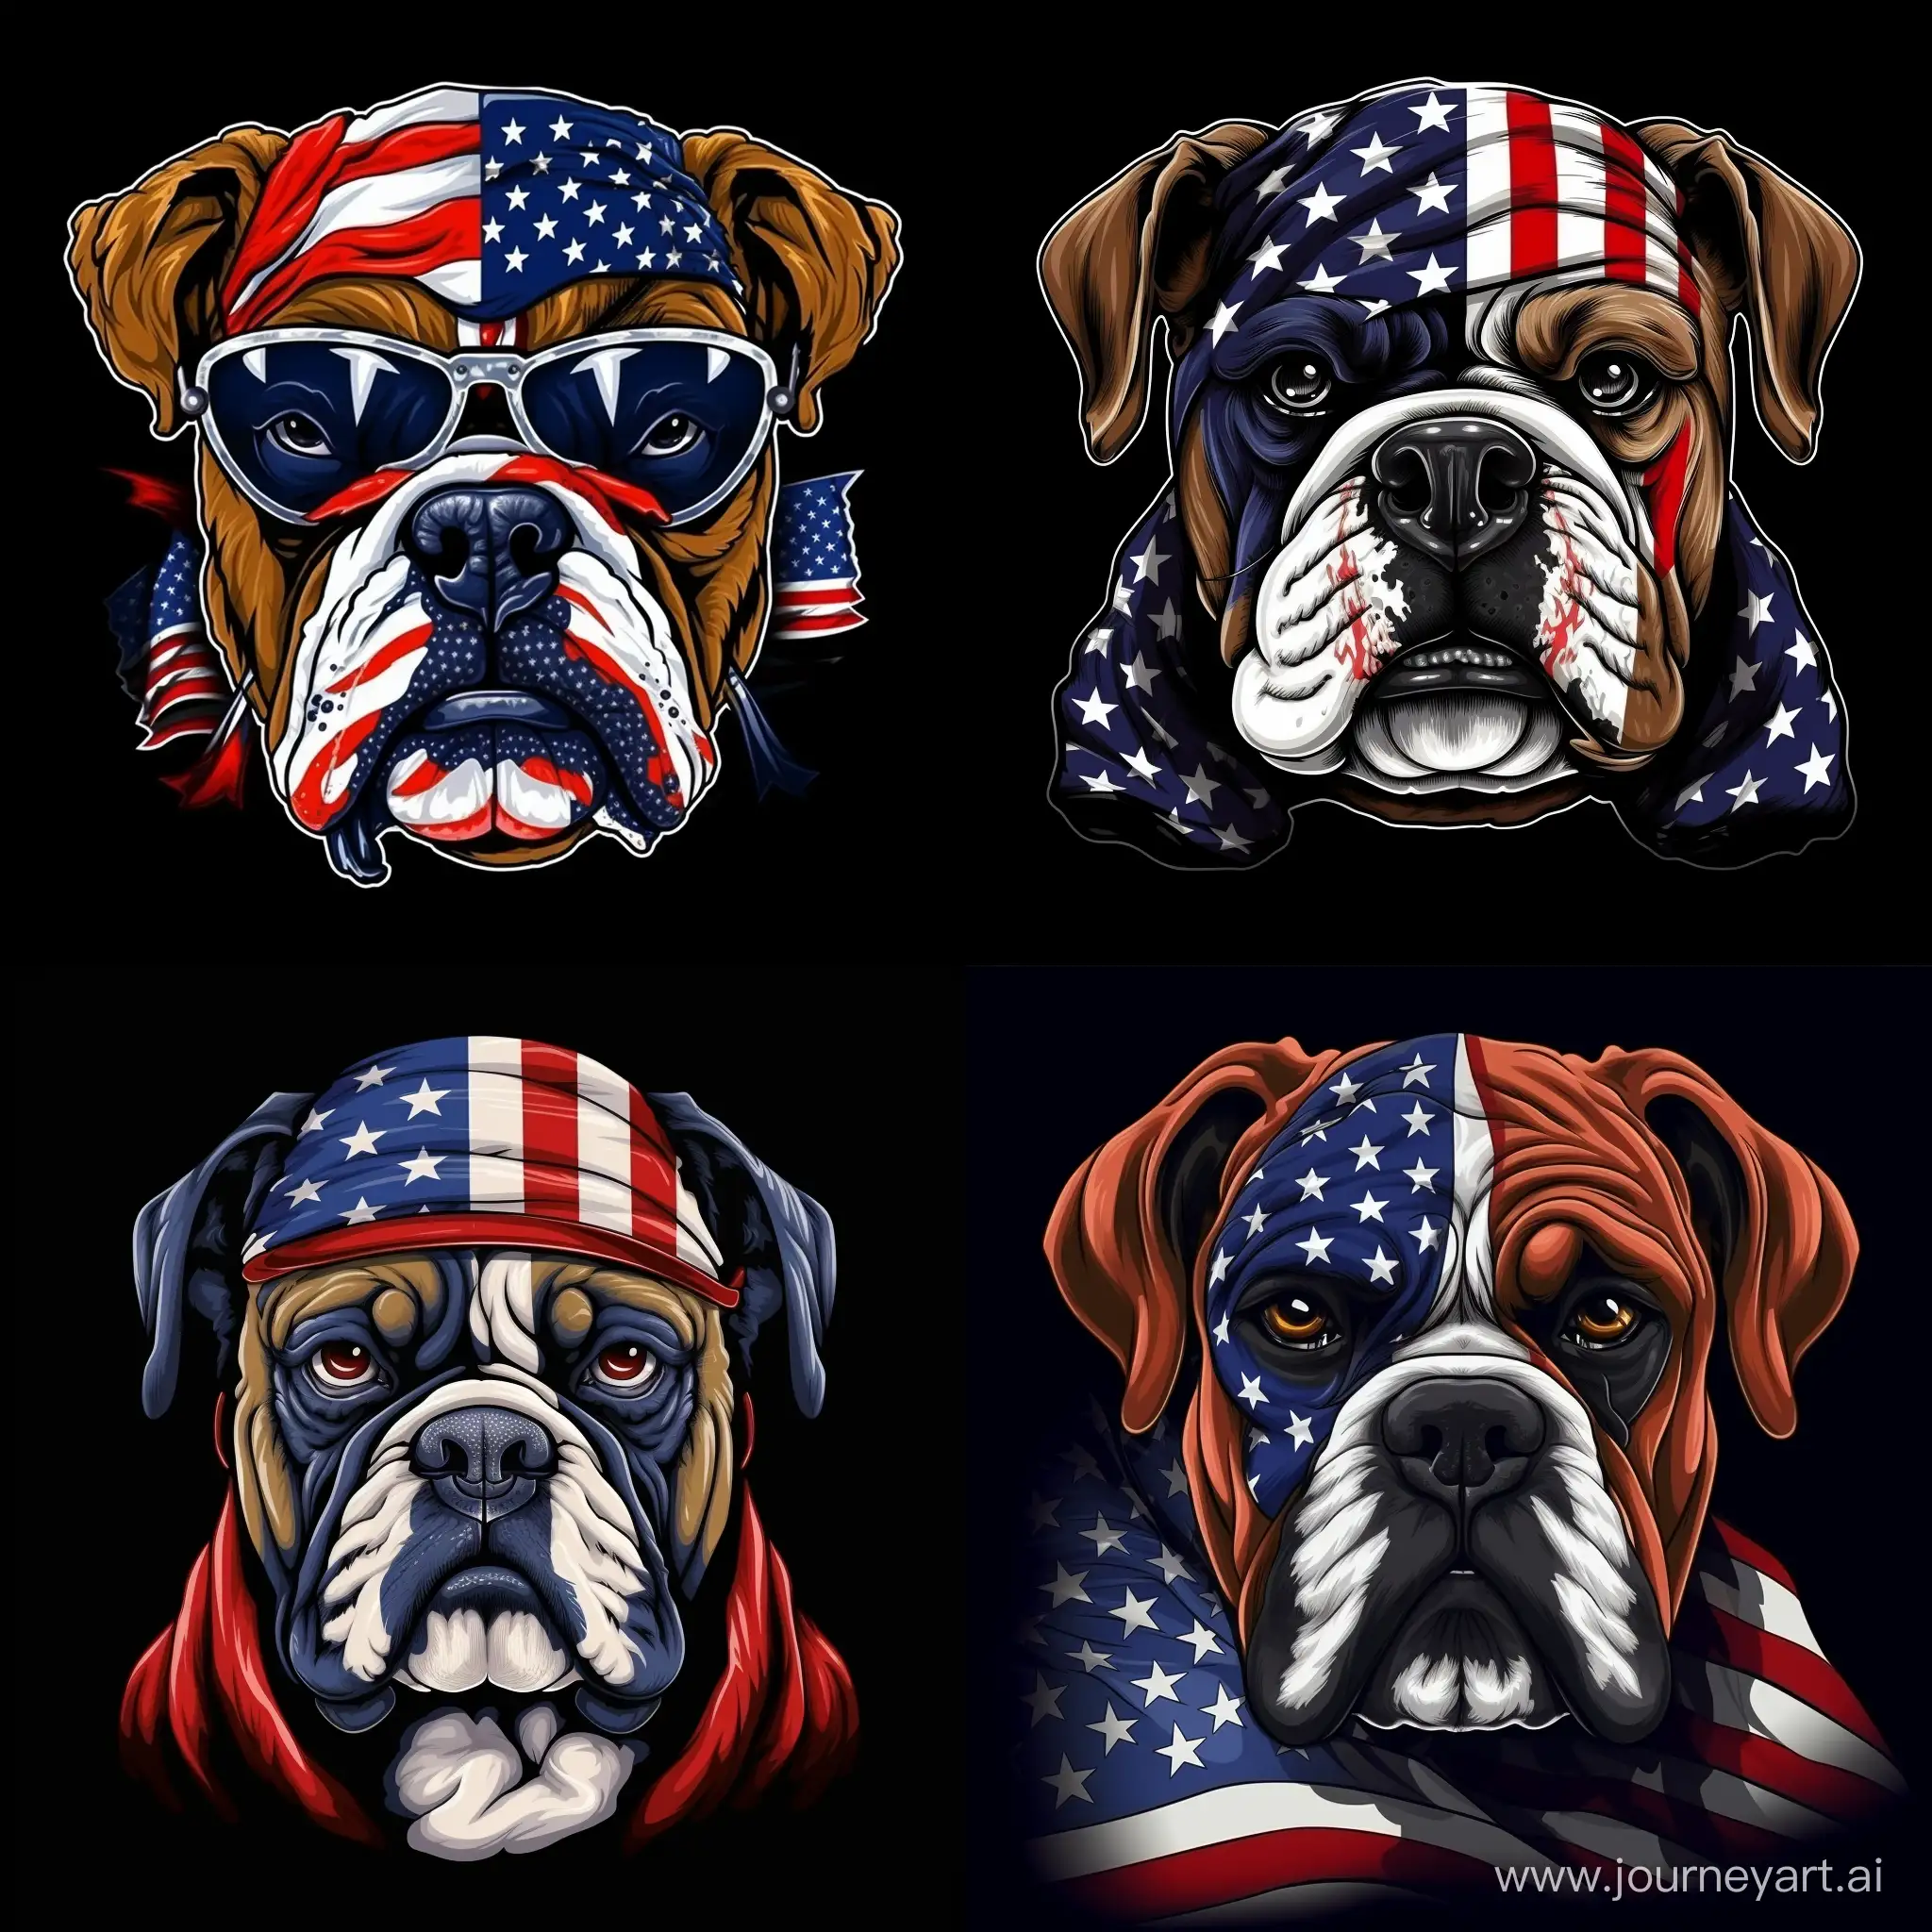 Ferocious-Bulldog-TShirt-Print-with-USA-Flag-Bandana-on-Black-Background